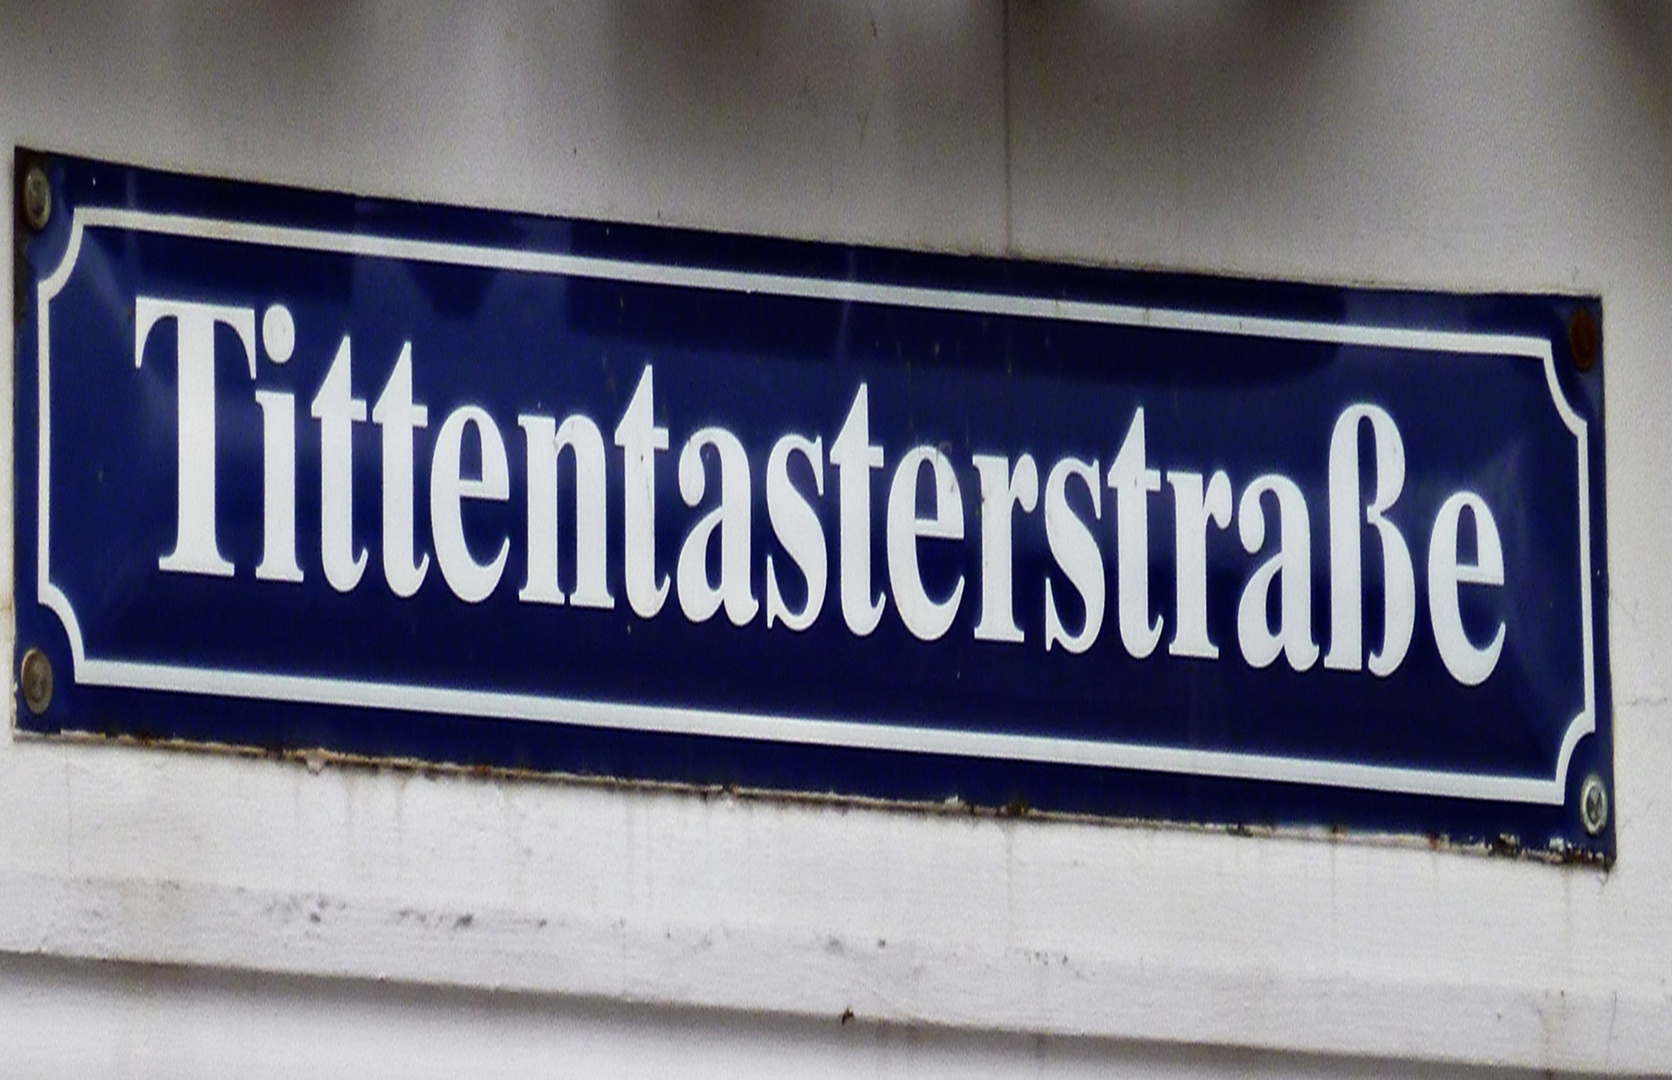 Kuriose Straßennamen - Tittentasterstr in Wismar